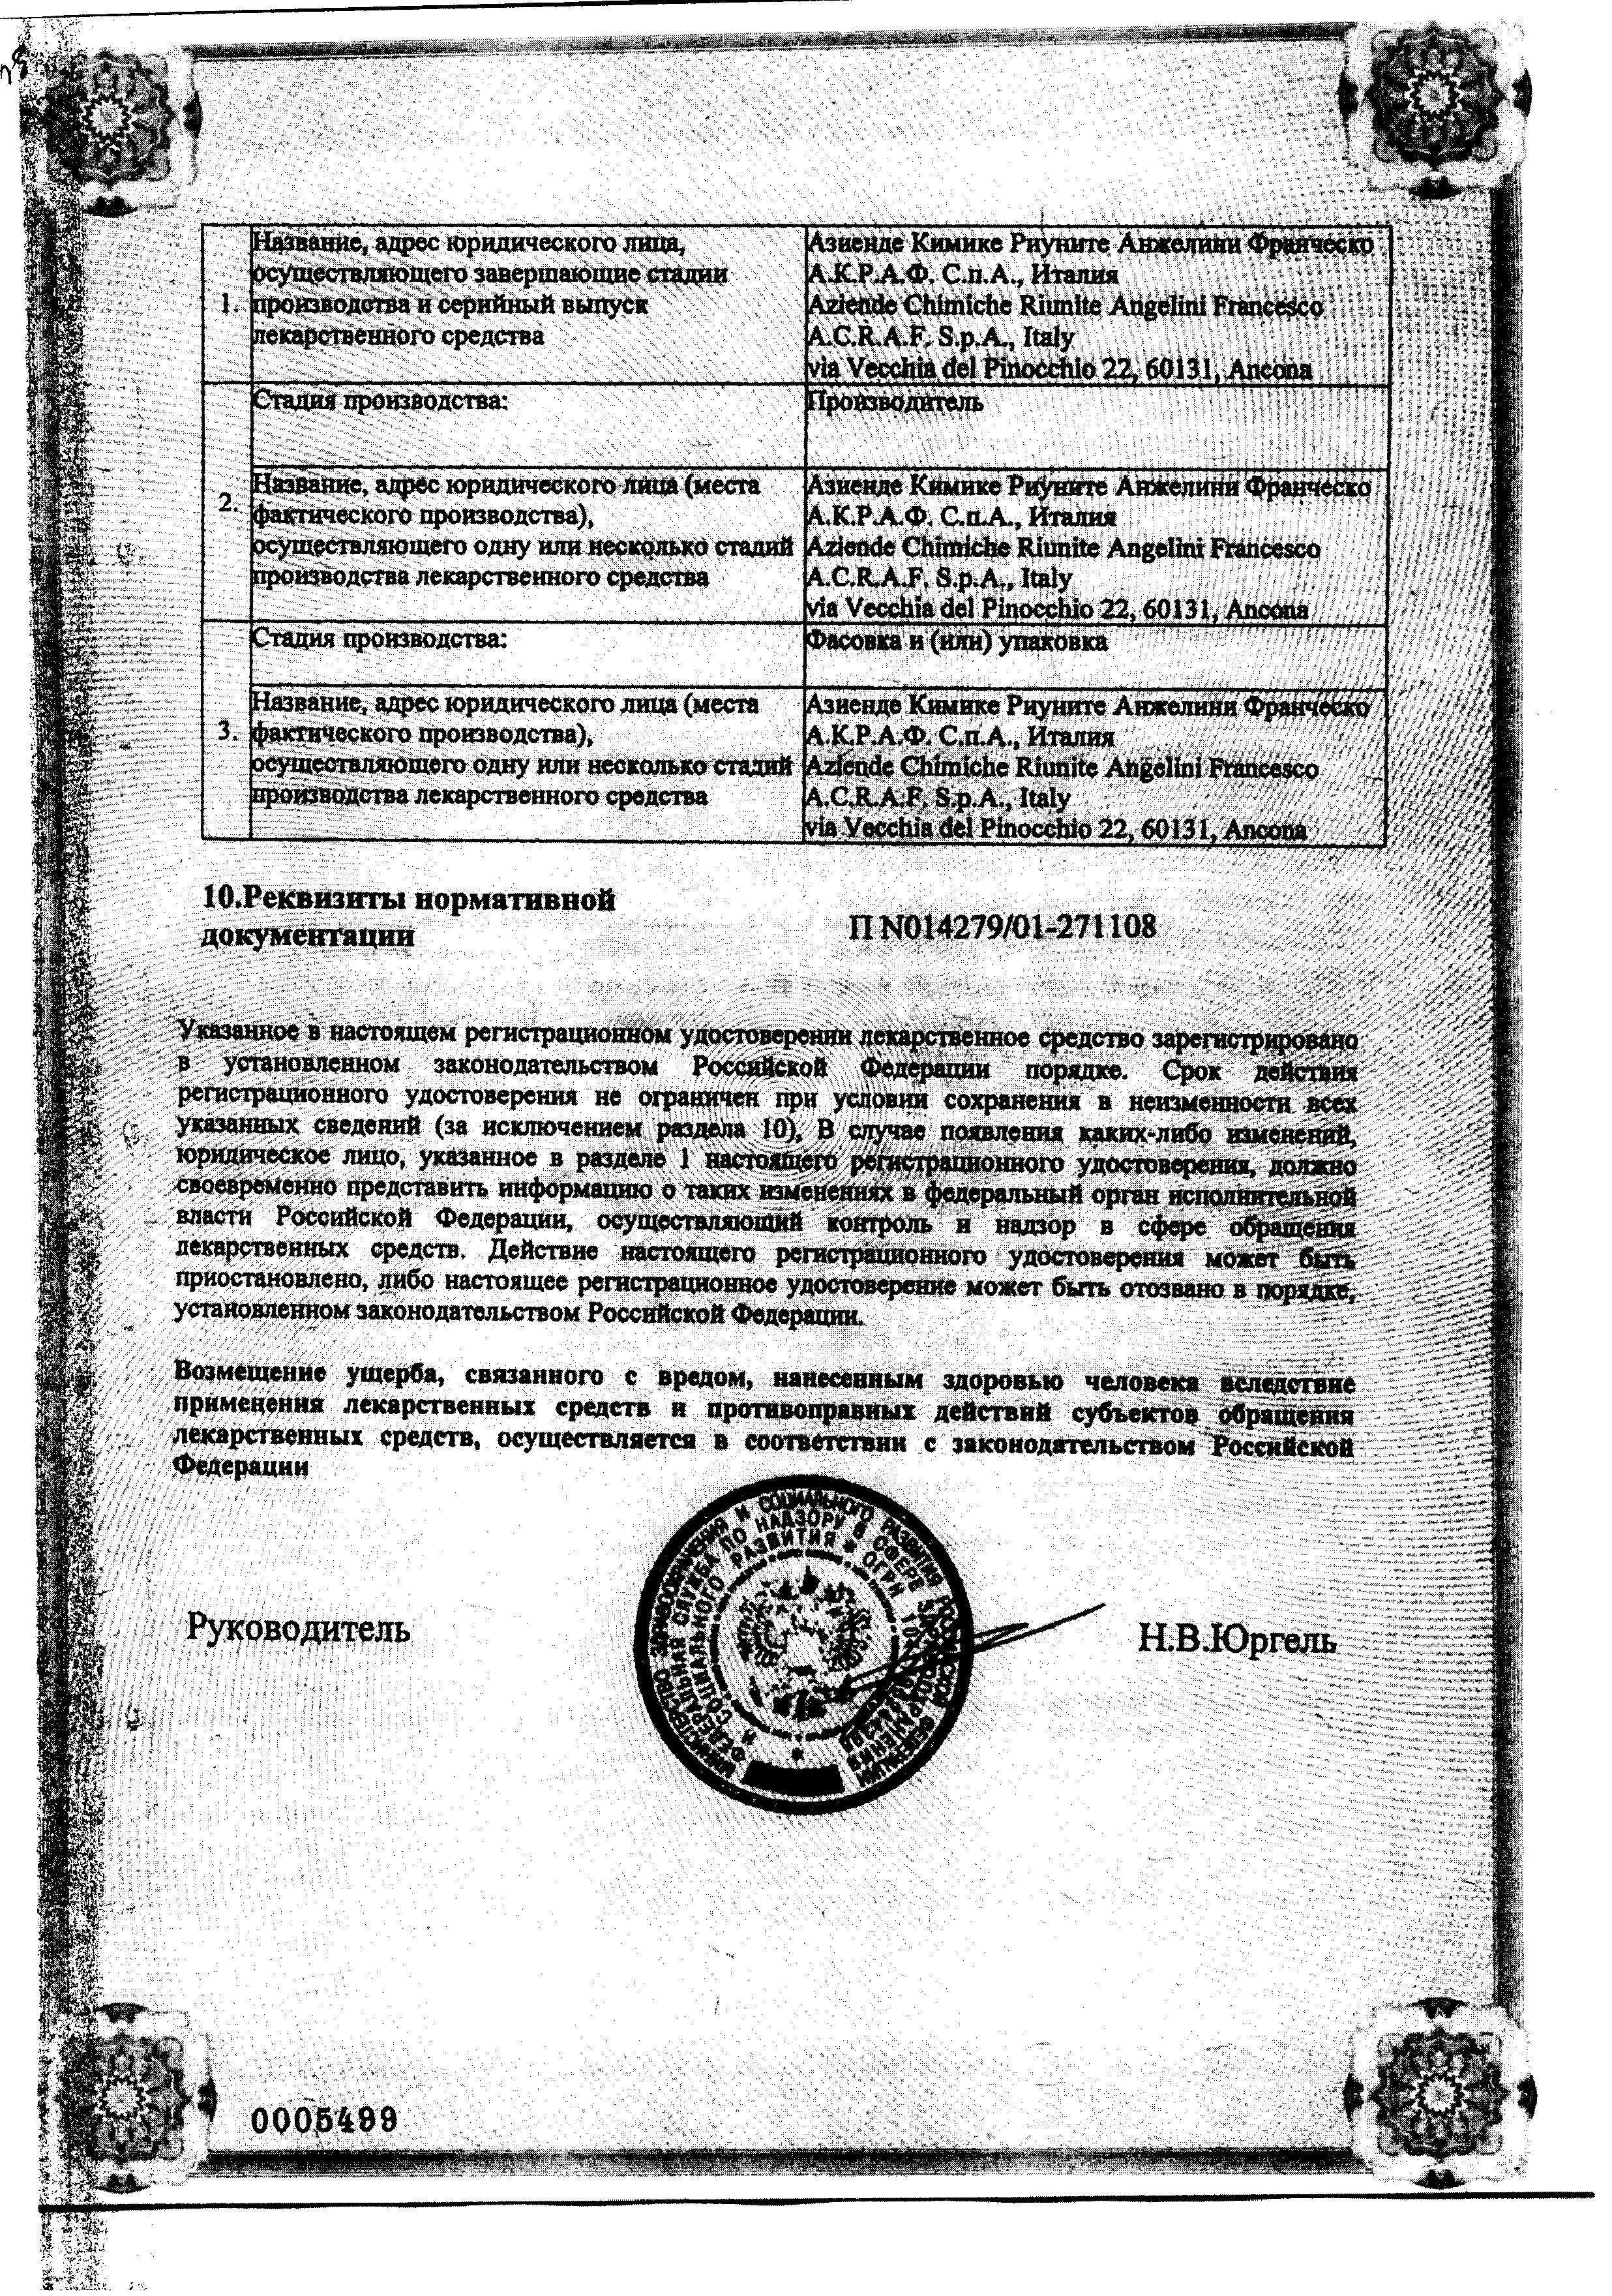 Тантум Верде сертификат